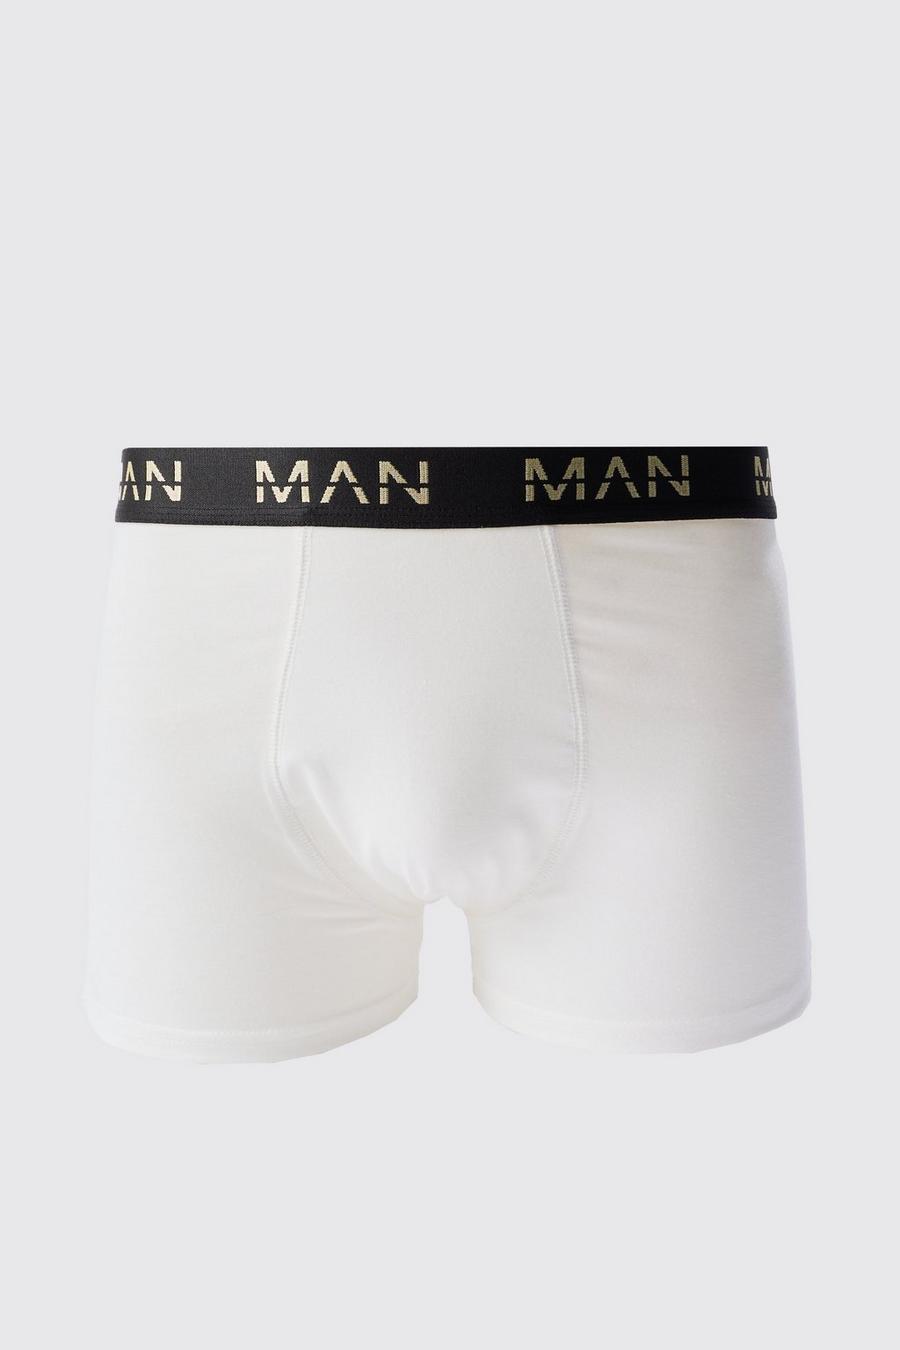 Boxer Man Dash color oro bianchi, White